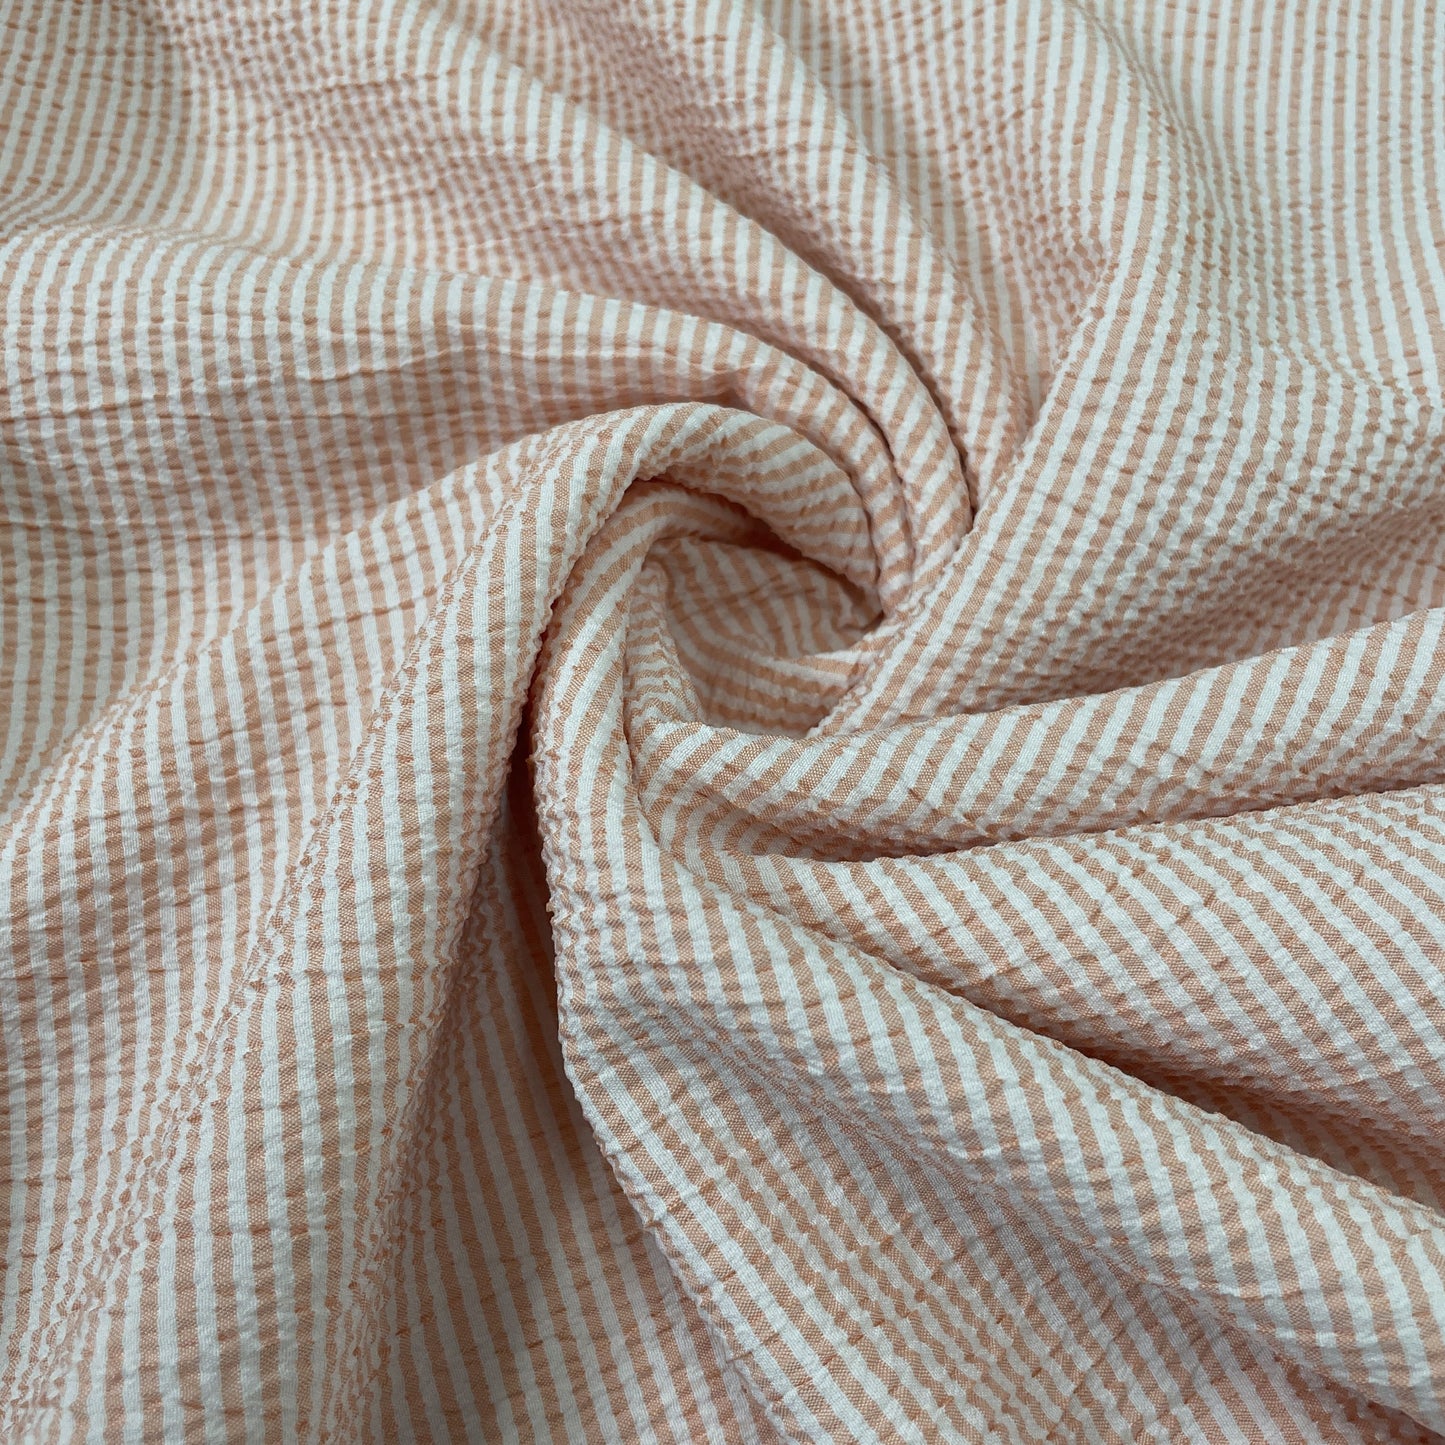 Classic White Salmon Pink Stripe Seer Sucker Blended Cotton Fabric